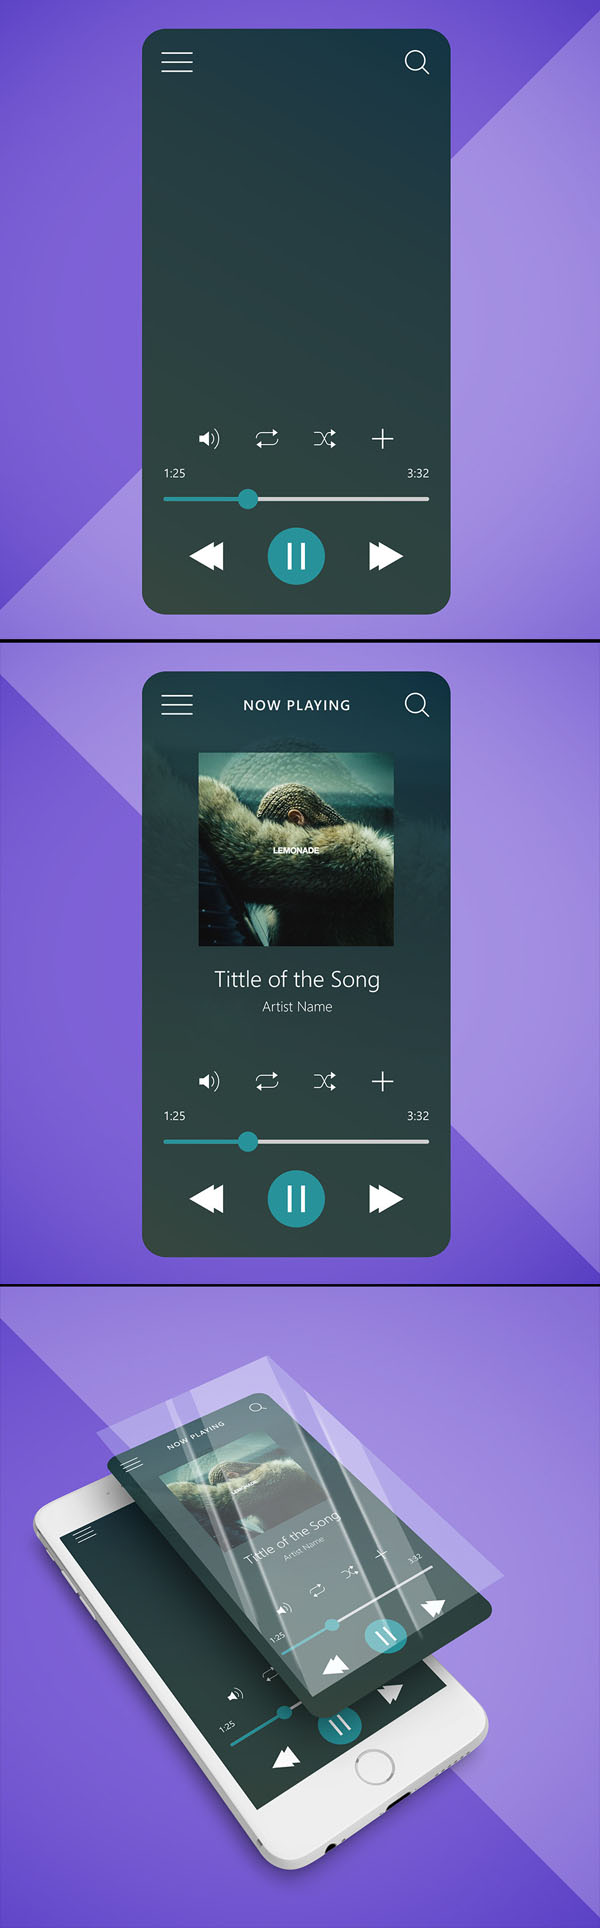 Music Player Interface - Free UI Mockup + Illustration